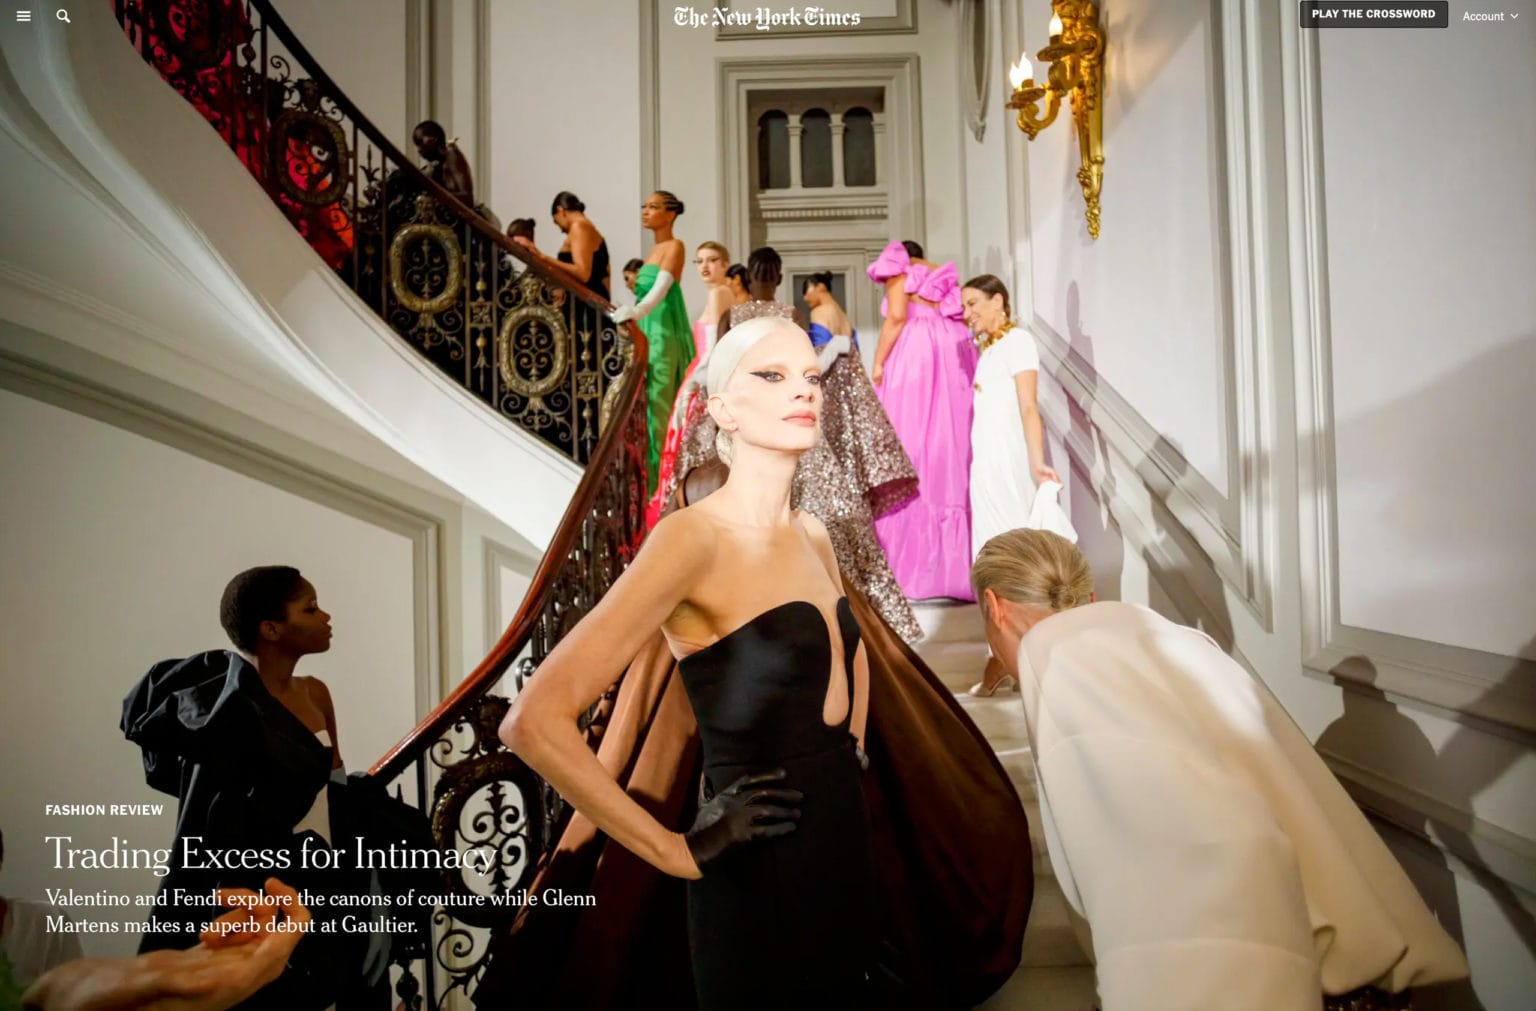 Kristen McMenamy at The Valentino Fashion Show, Photo by Valerio Mezzanotti for The New York Times